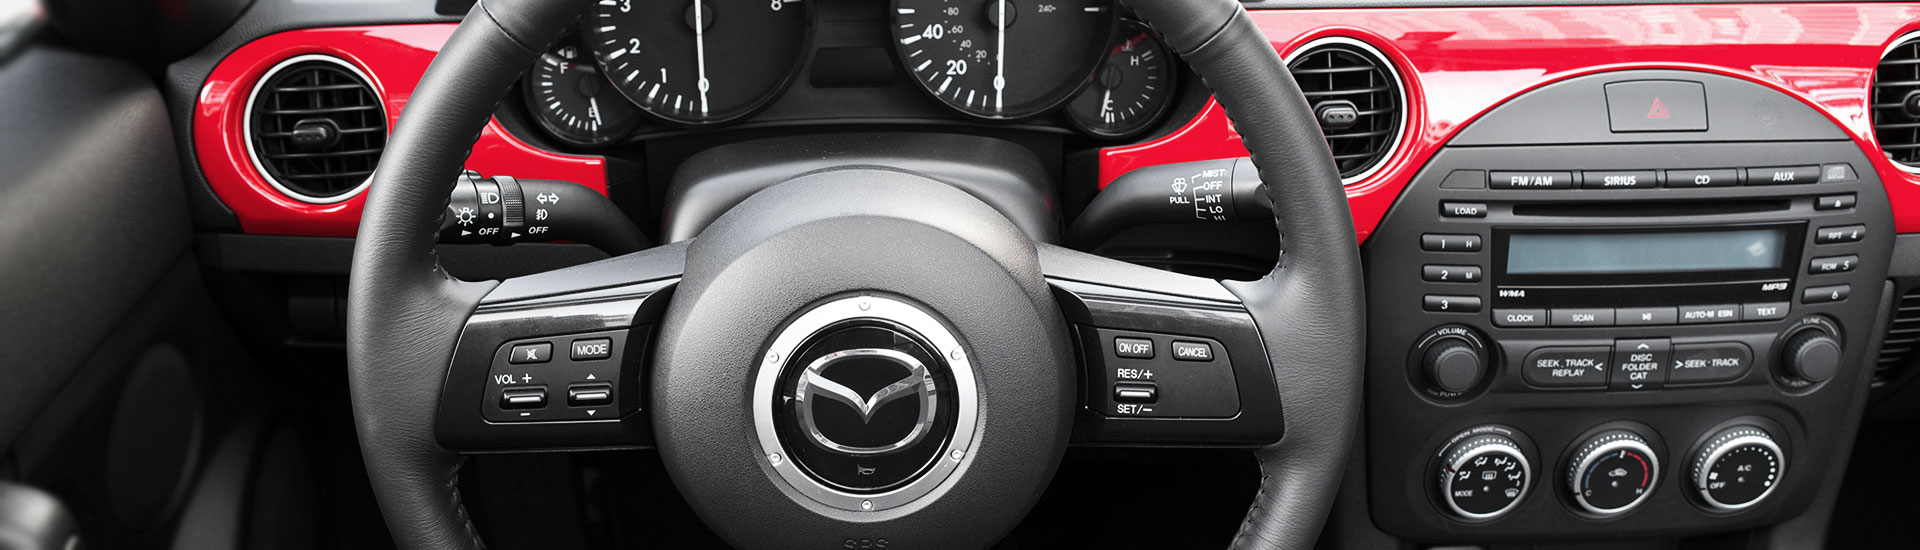 Mazda MX-5 Miata Custom Dash Kits